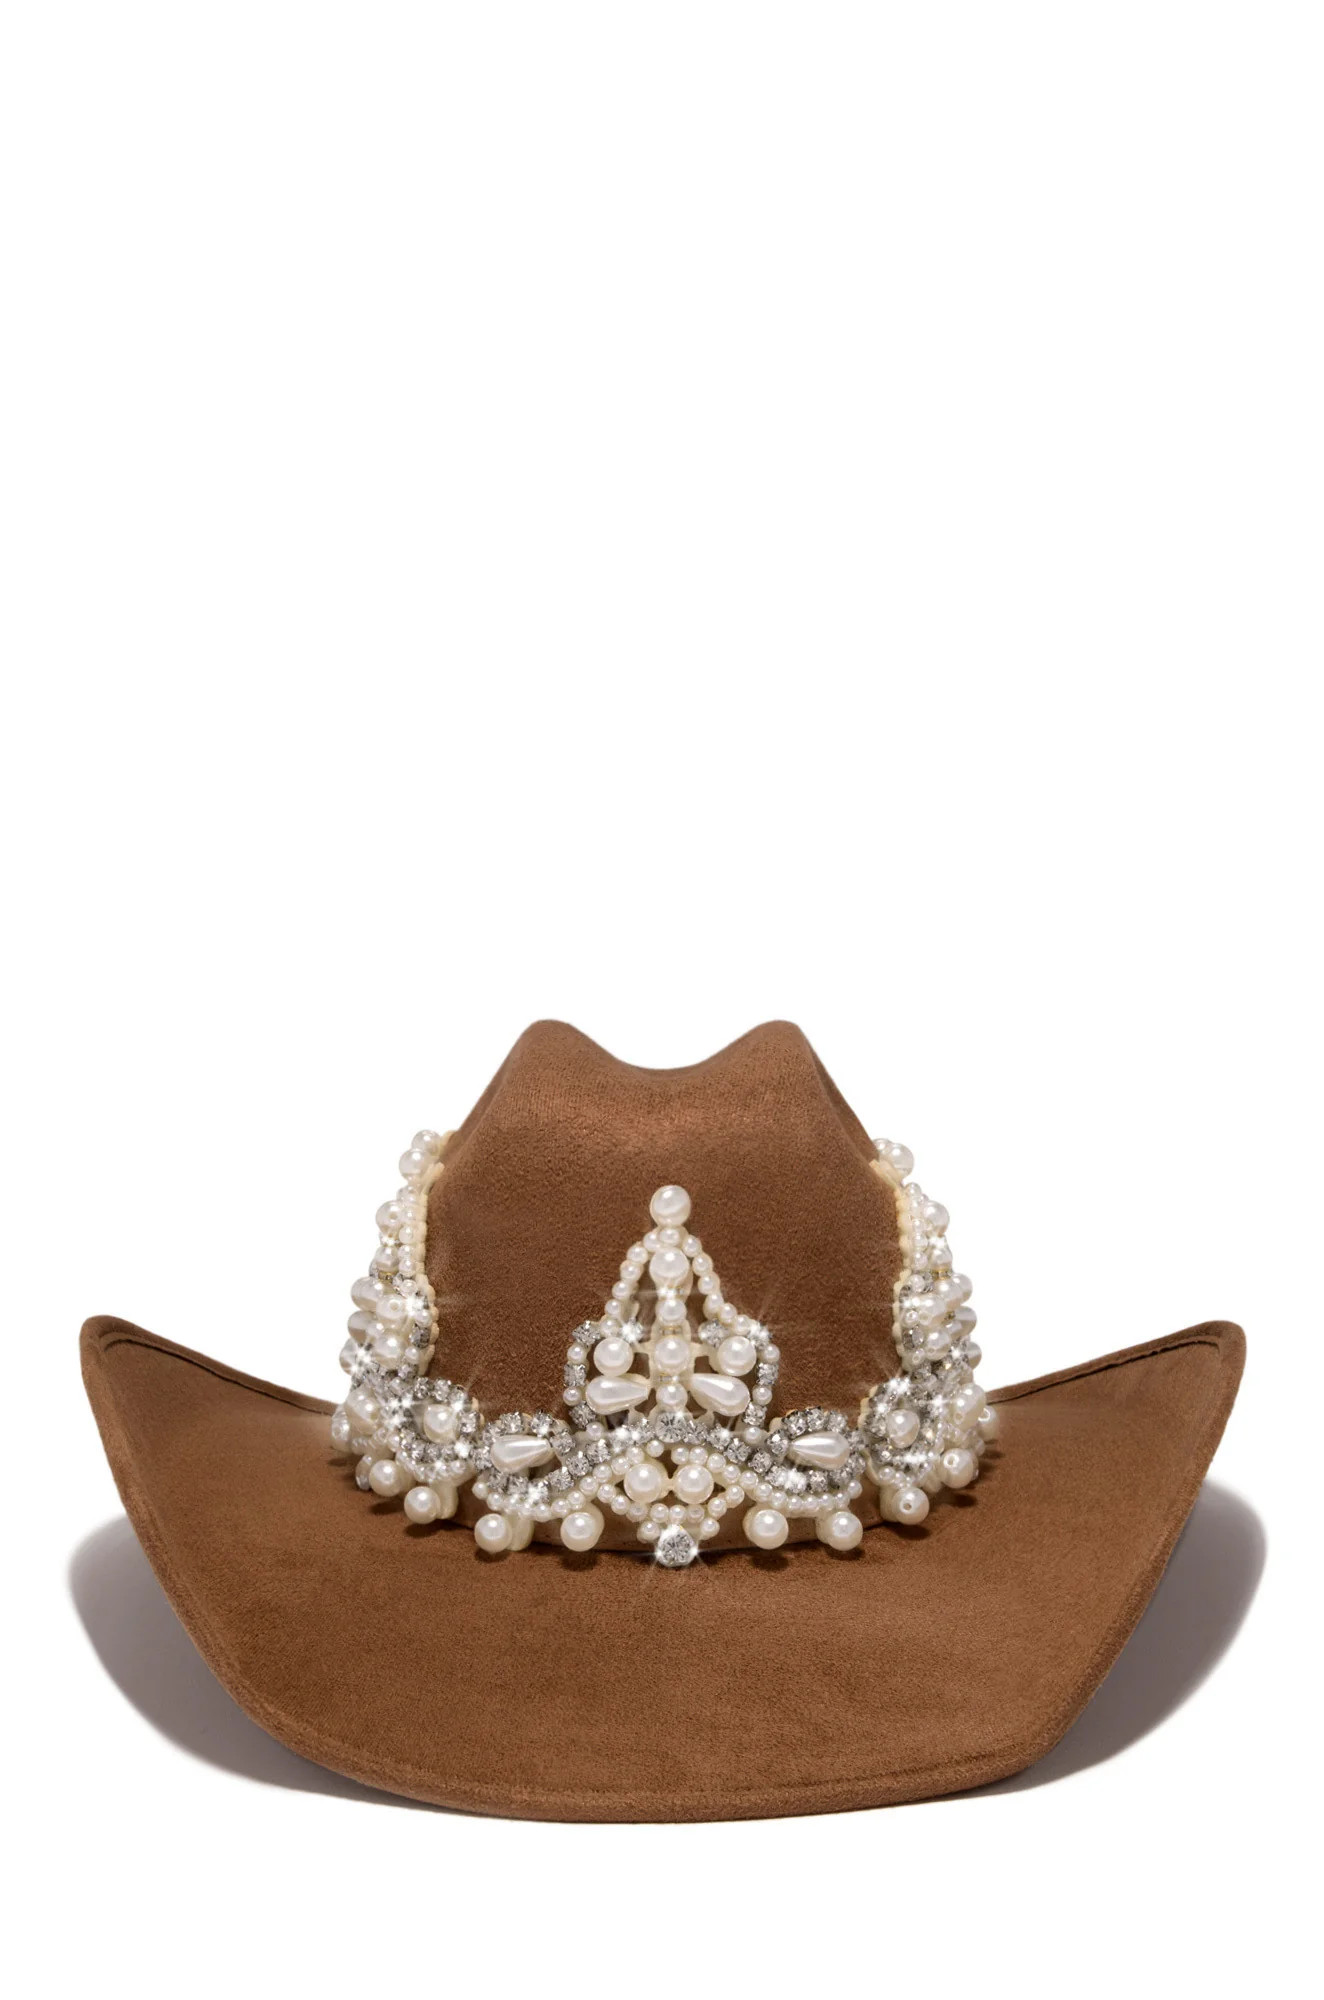 Miss Lola | Selena Brown Embellished Western Hat | MISS LOLA